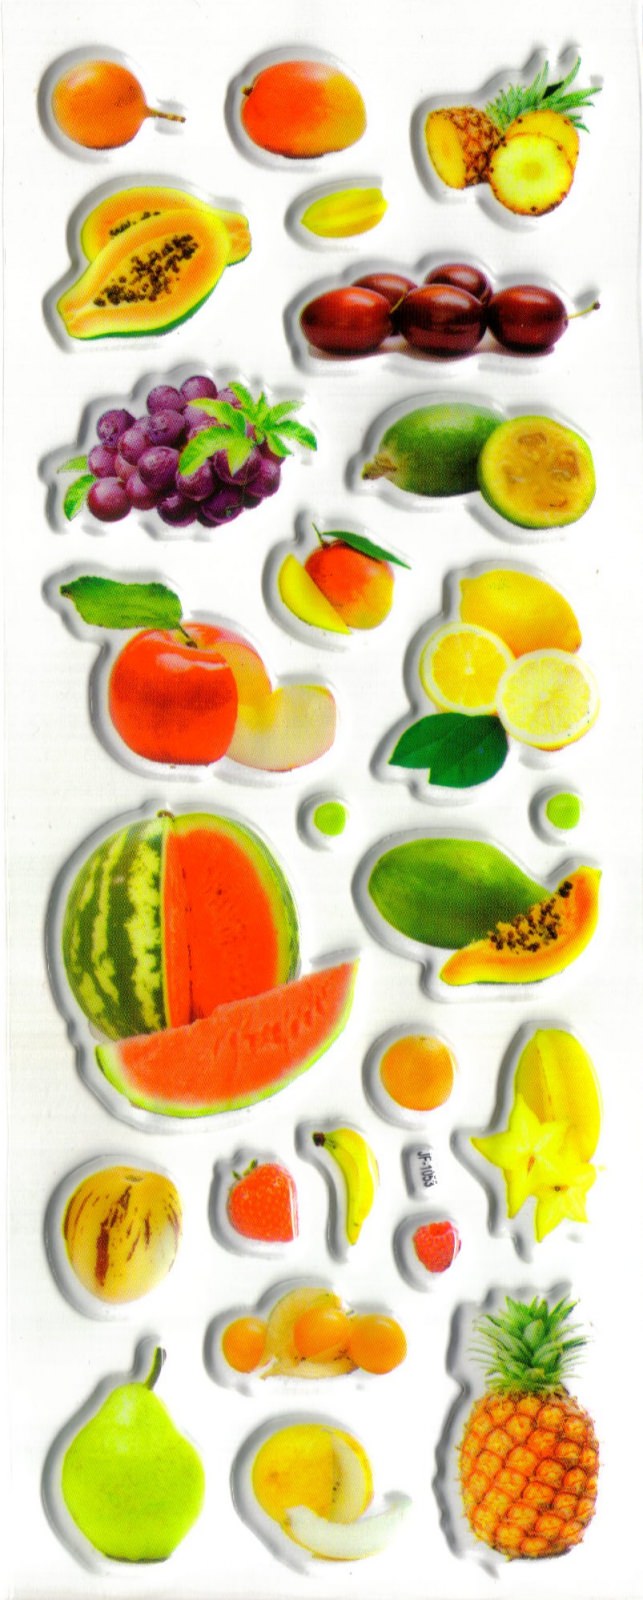 fruits pedagogie enfant apprentissage gommette sticker autocollant adhesive rigide JF1344